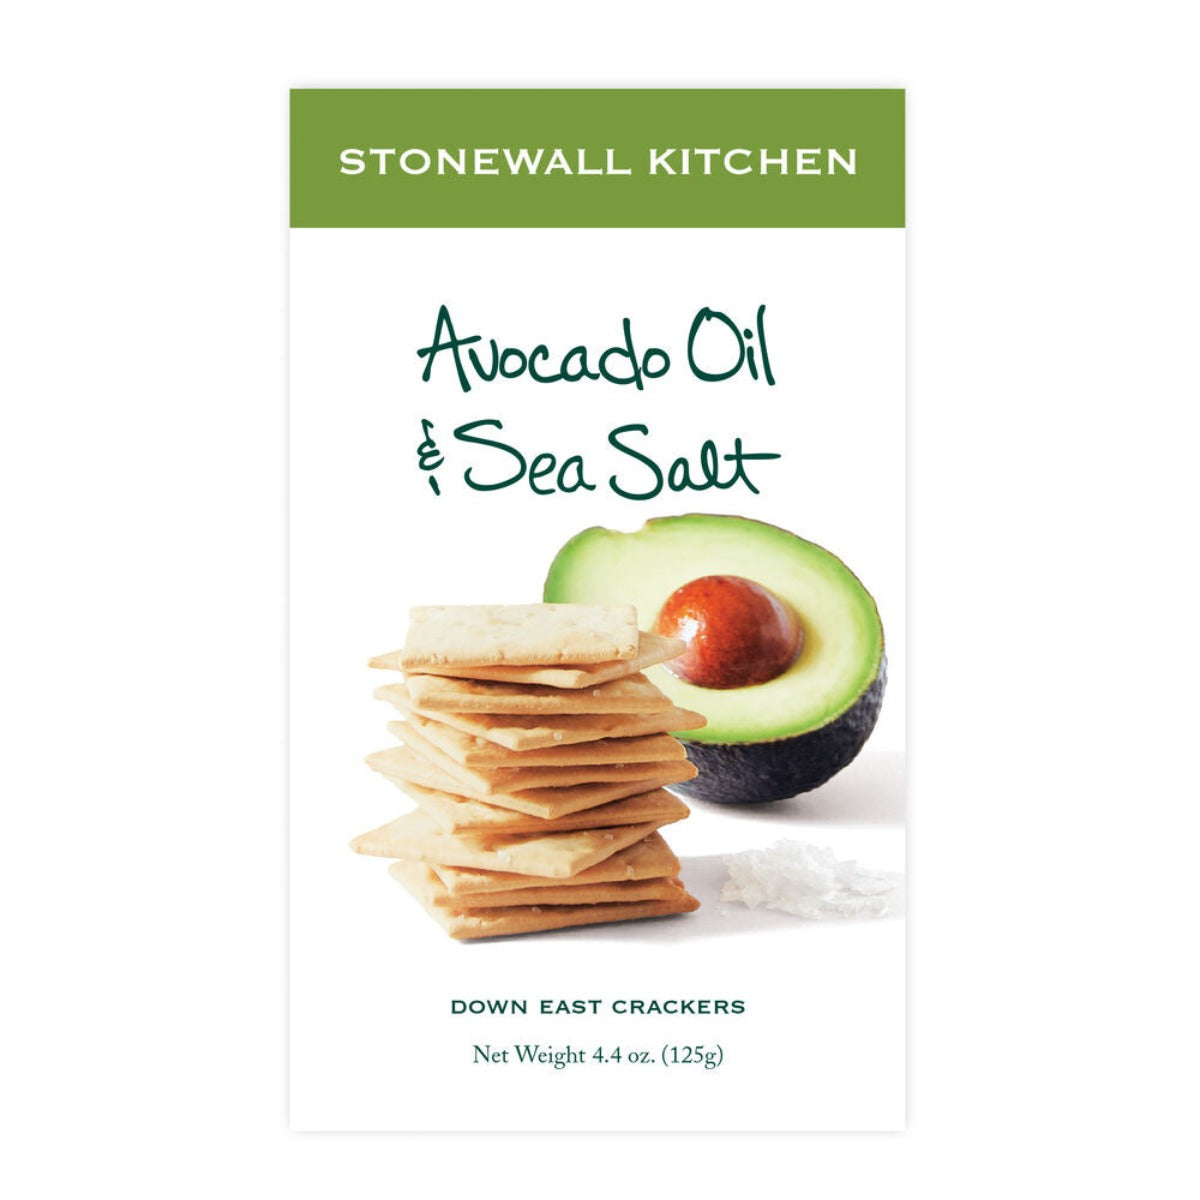 Avocado Oil & Sea Salt Crackers